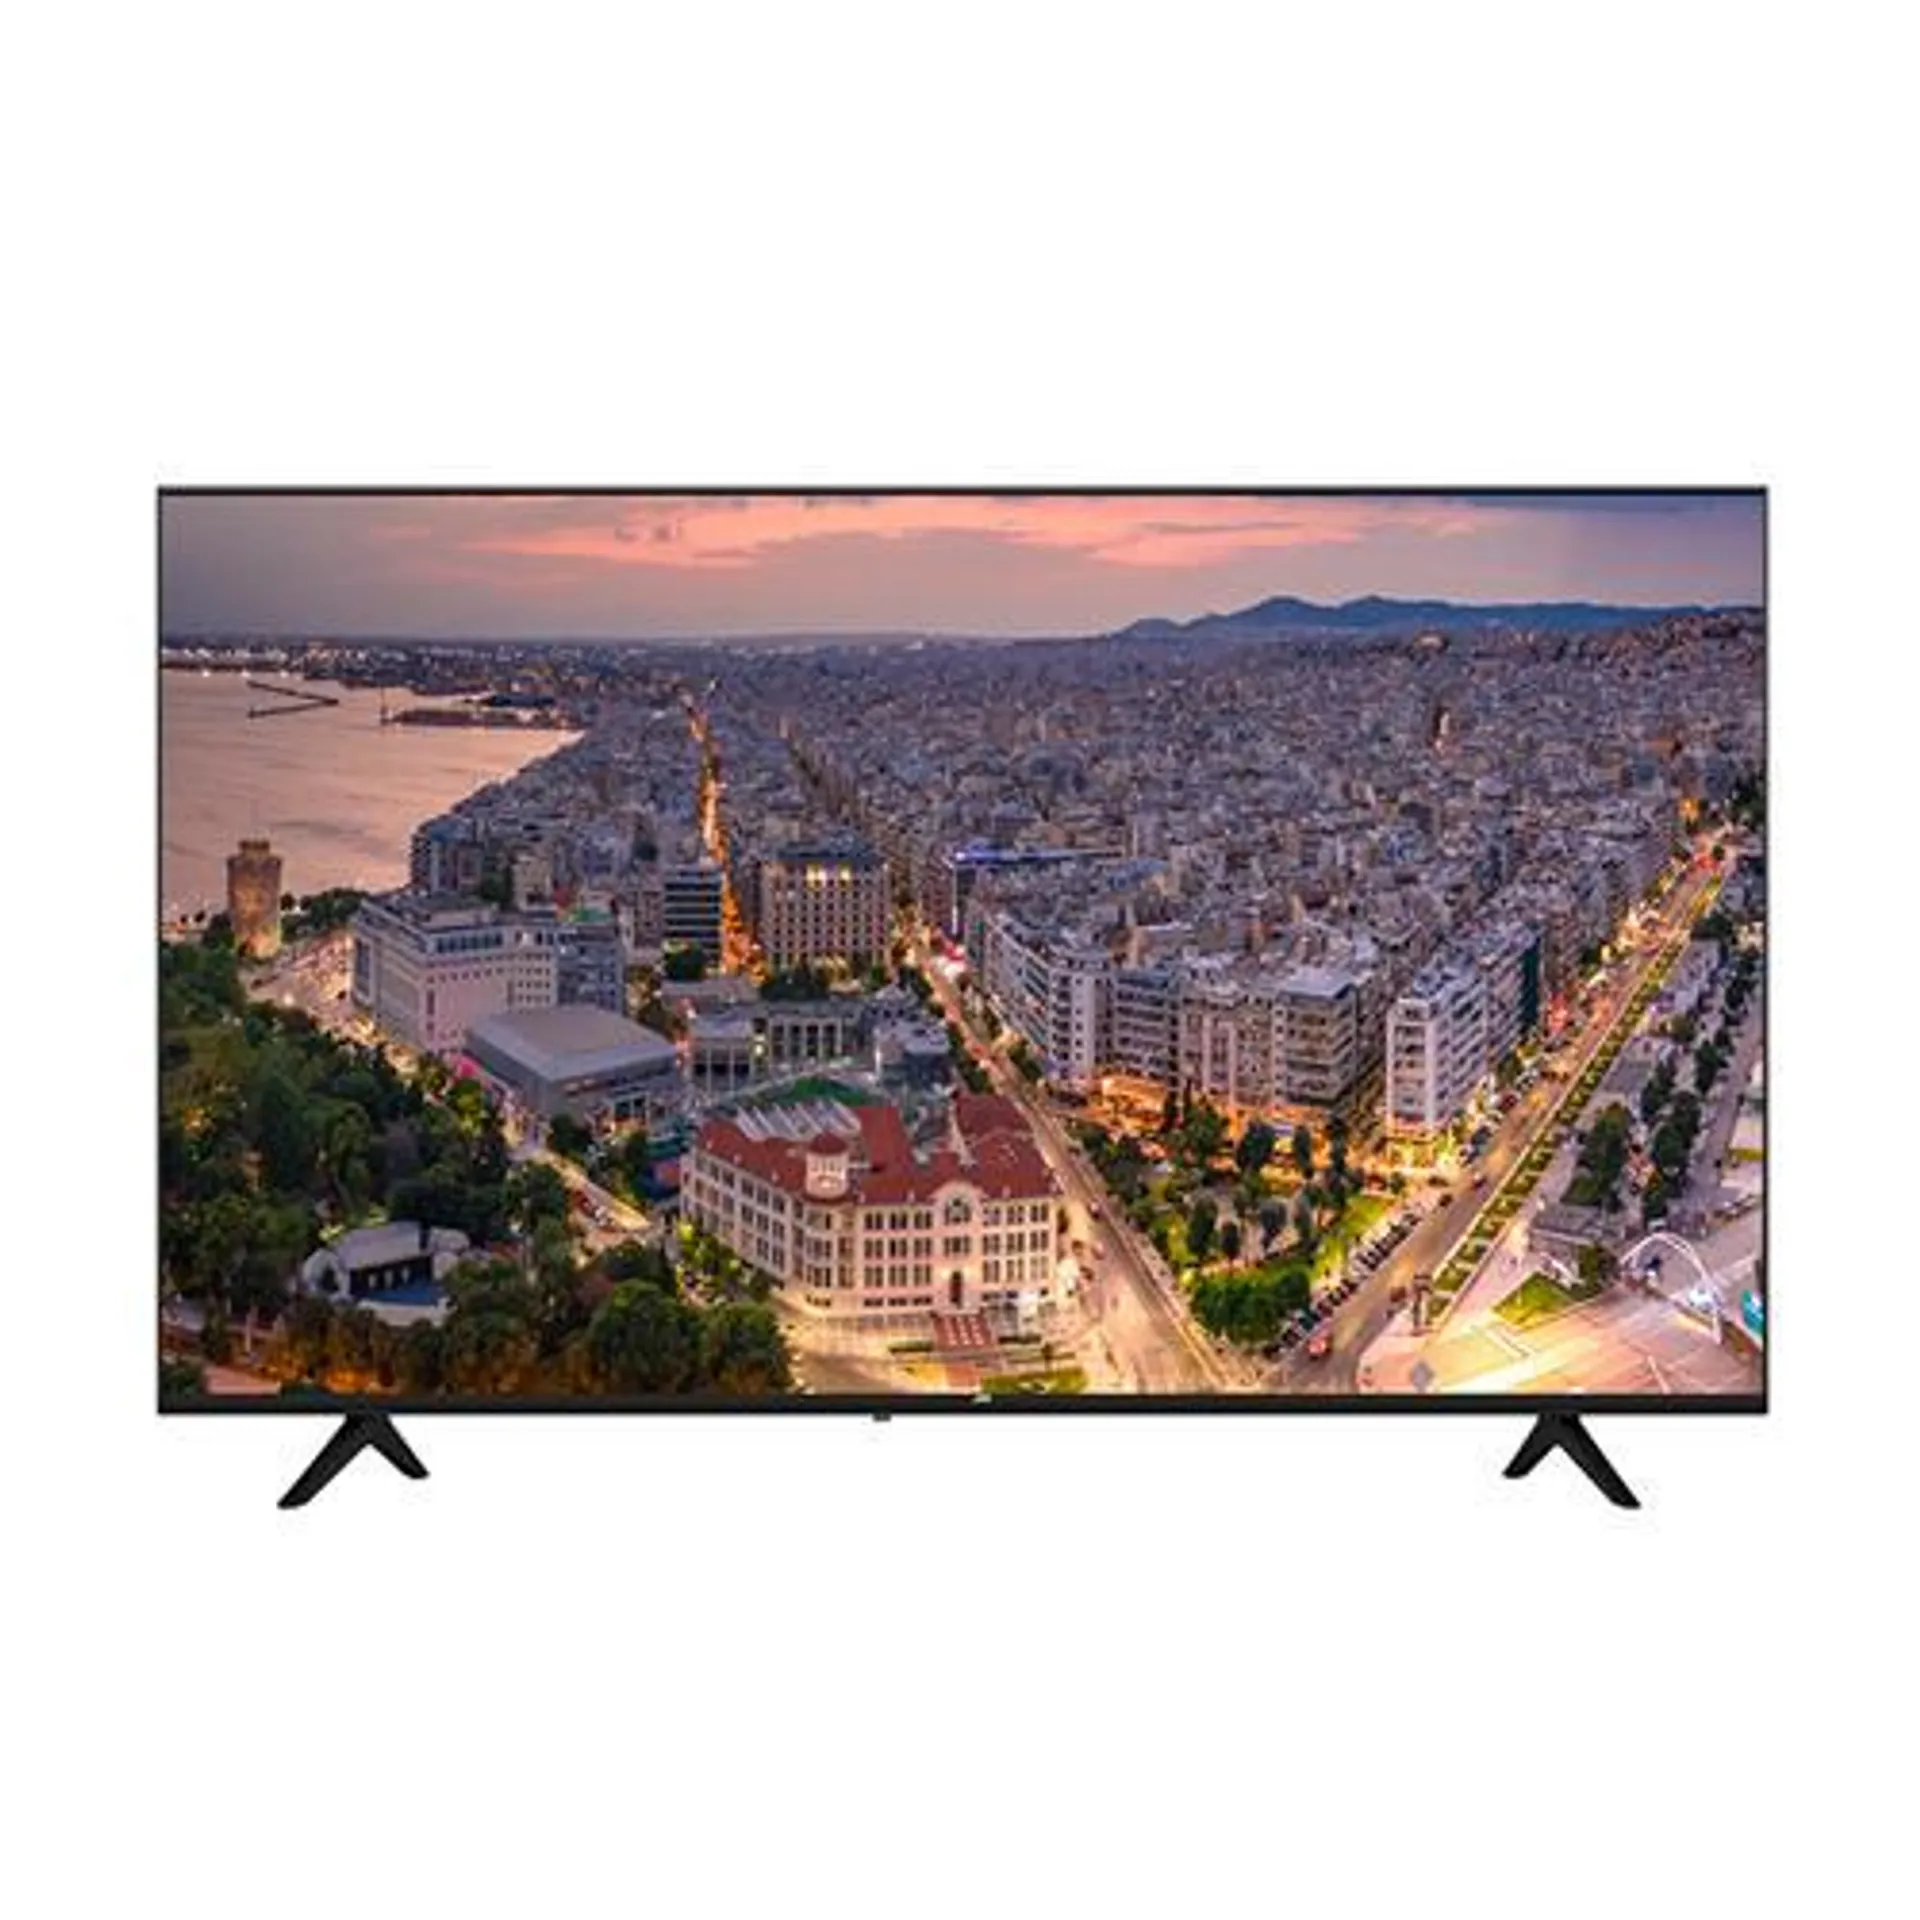 Smart Tv Jvc 43" LT43DA51252 Full HD